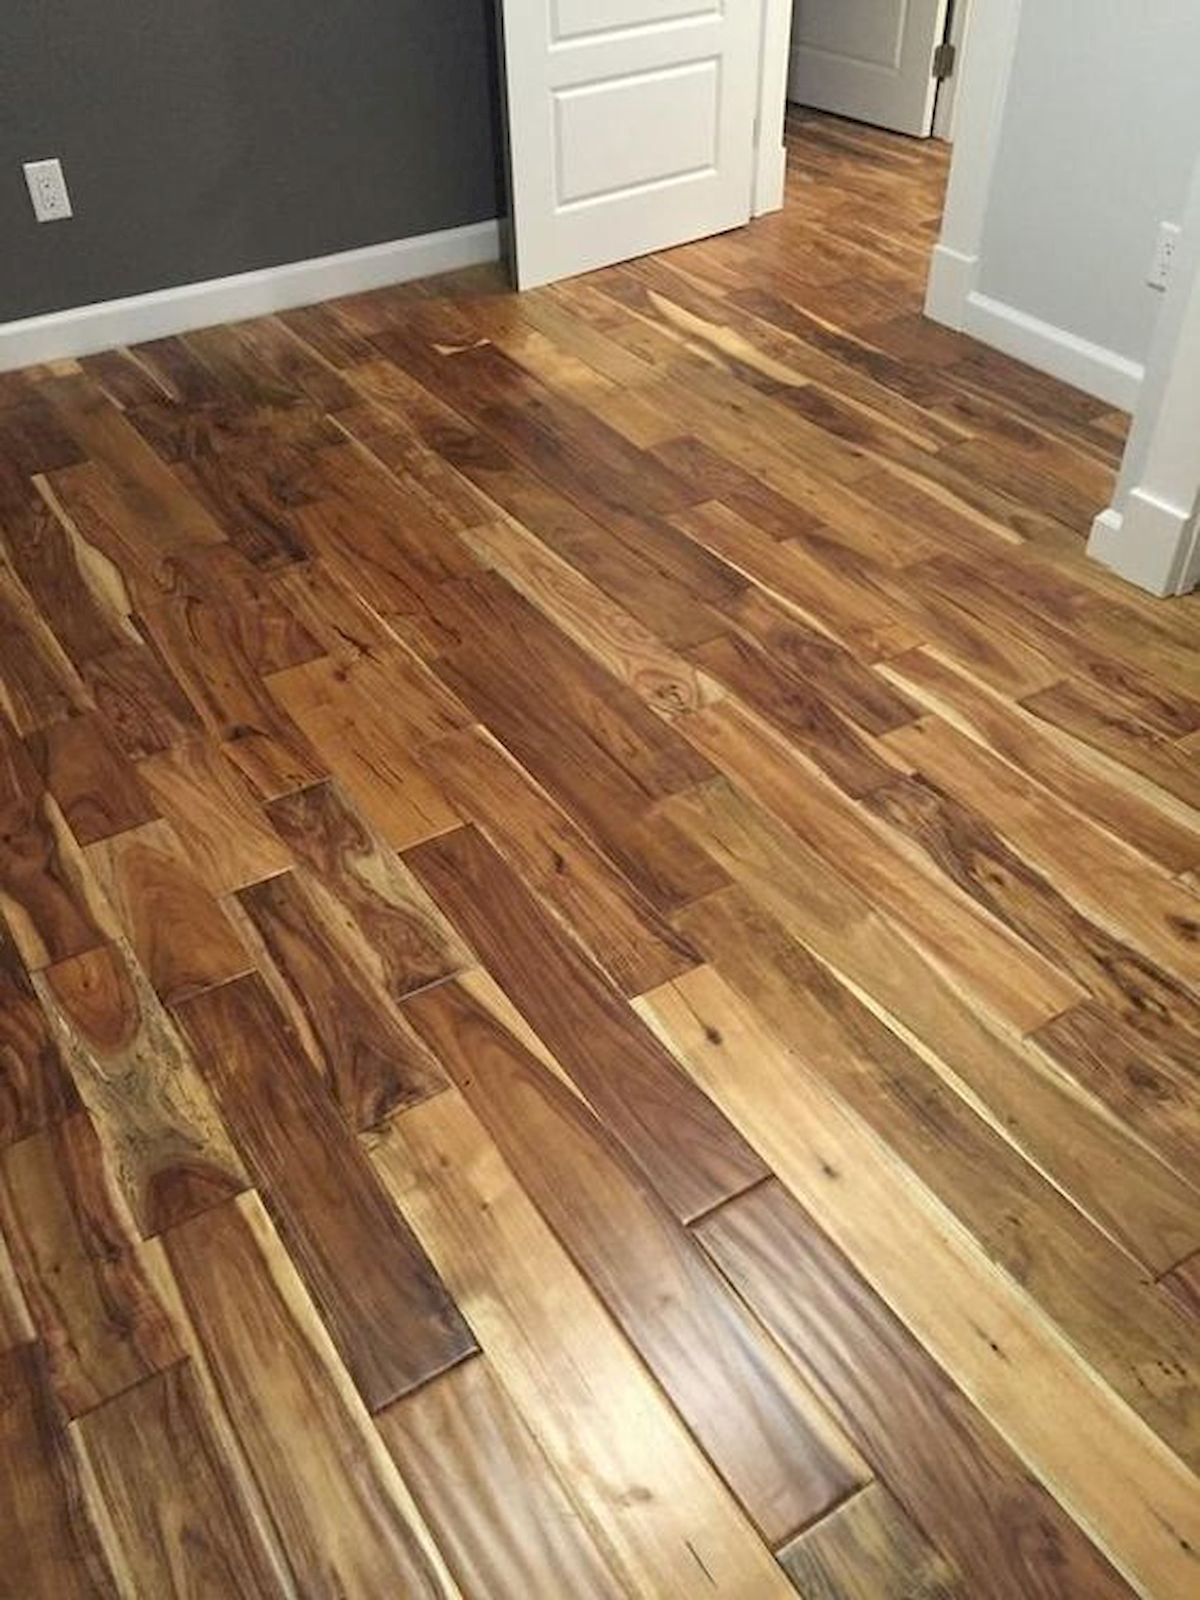 80 Gorgeous Hardwood Floor Ideas For Interior Home (13)